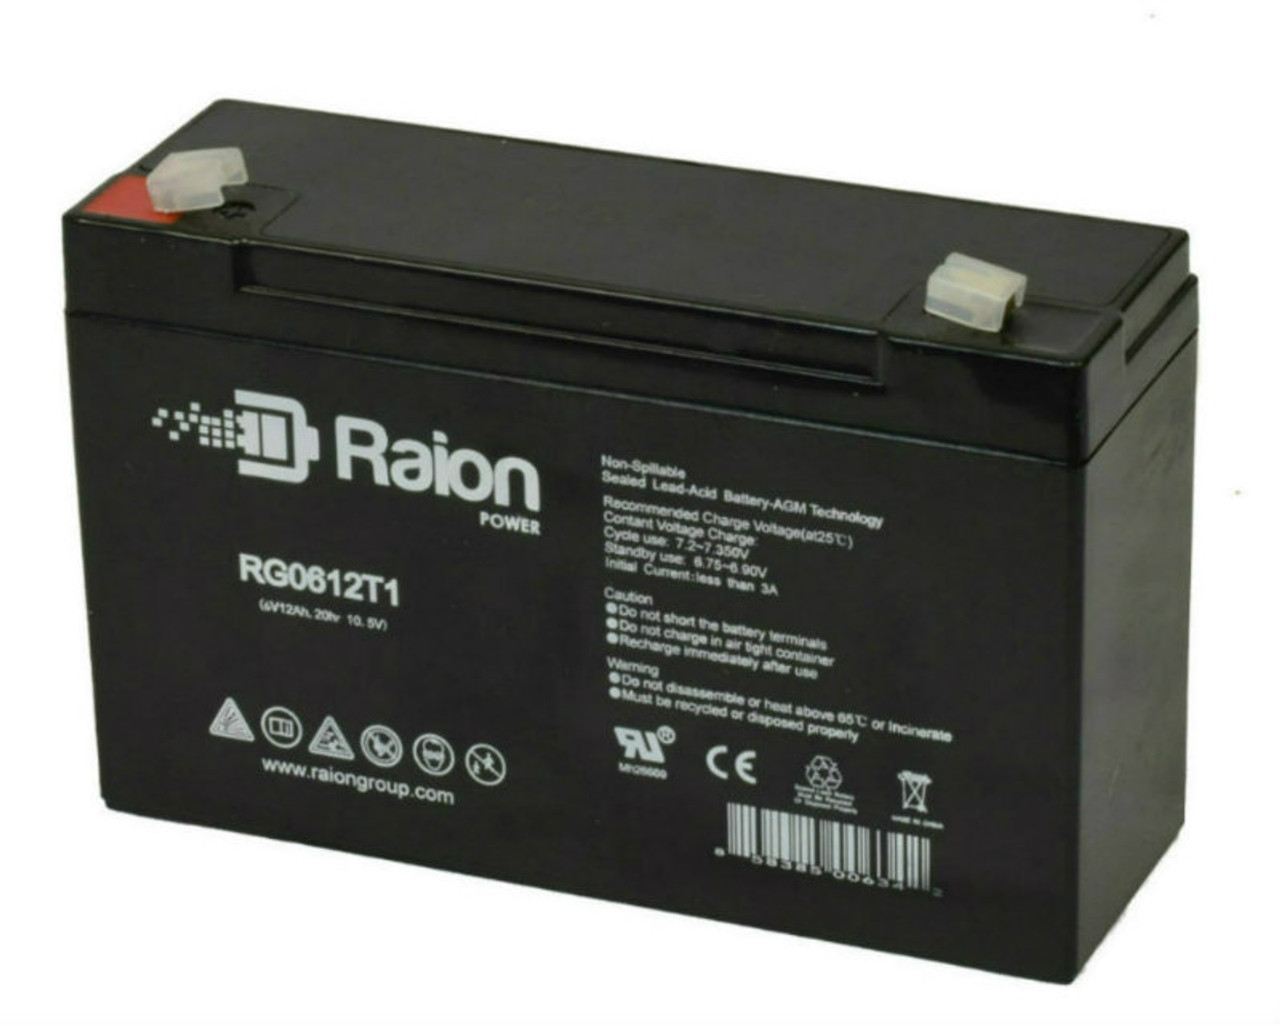 Raion Power RG06120T1 Replacement Emergency Light Battery for Elsar 438